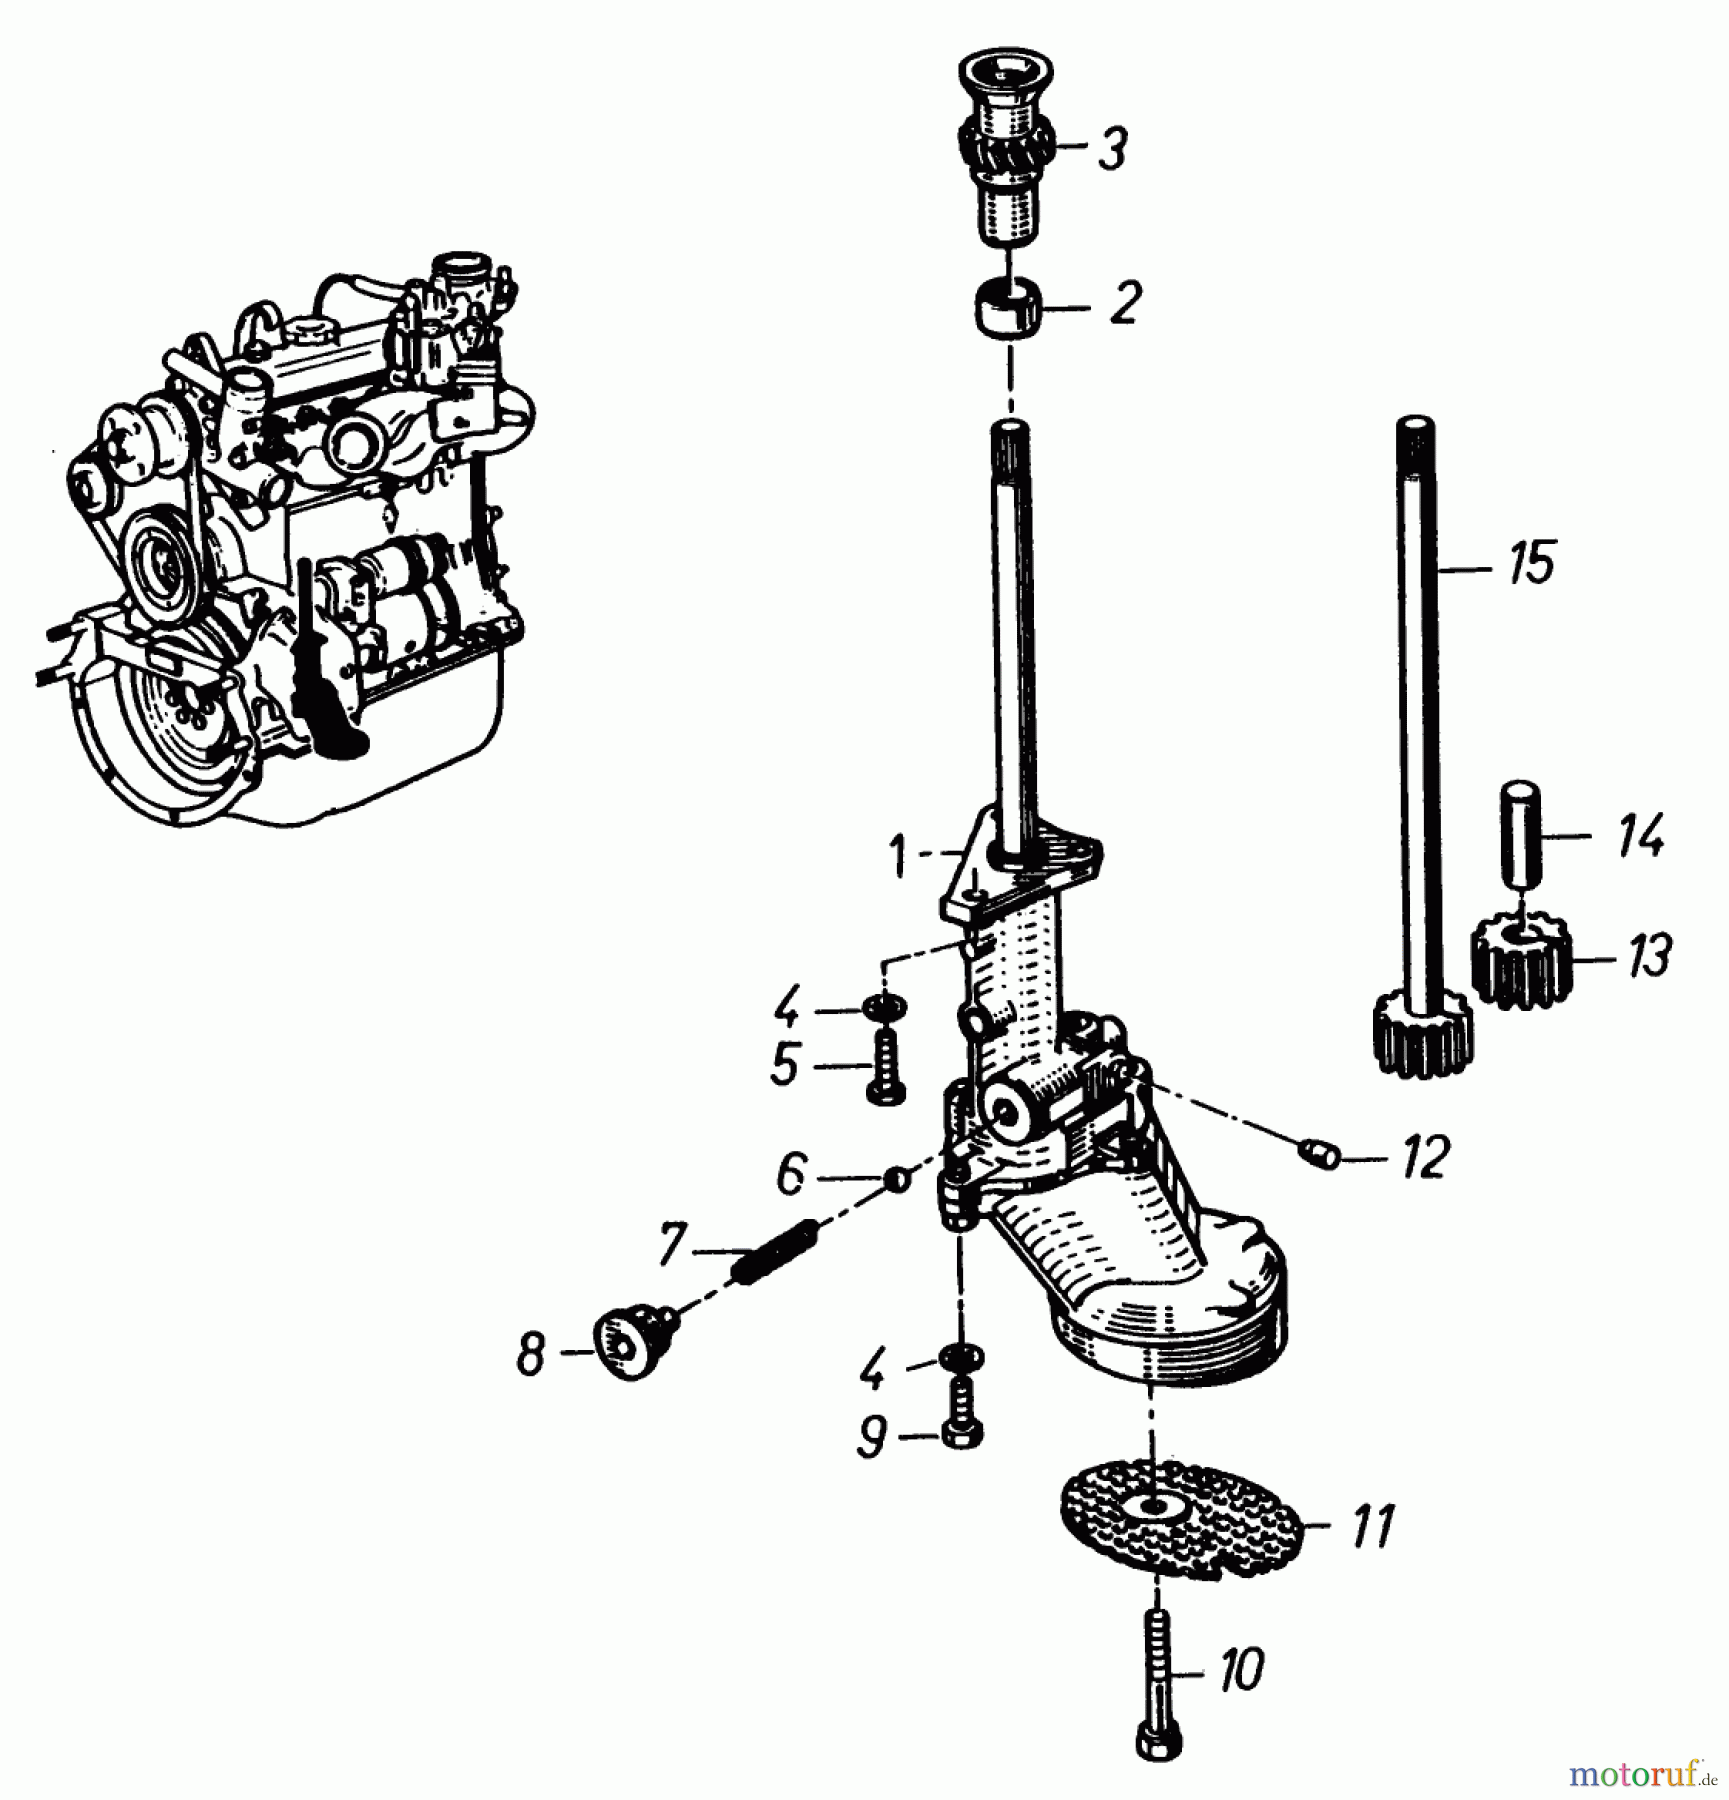  Toro Neu Mowers, Lawn & Garden Tractor Seite 2 81-20RG01 (D-250) - Toro D-250 10-Speed Tractor, 1978 OIL PUMP